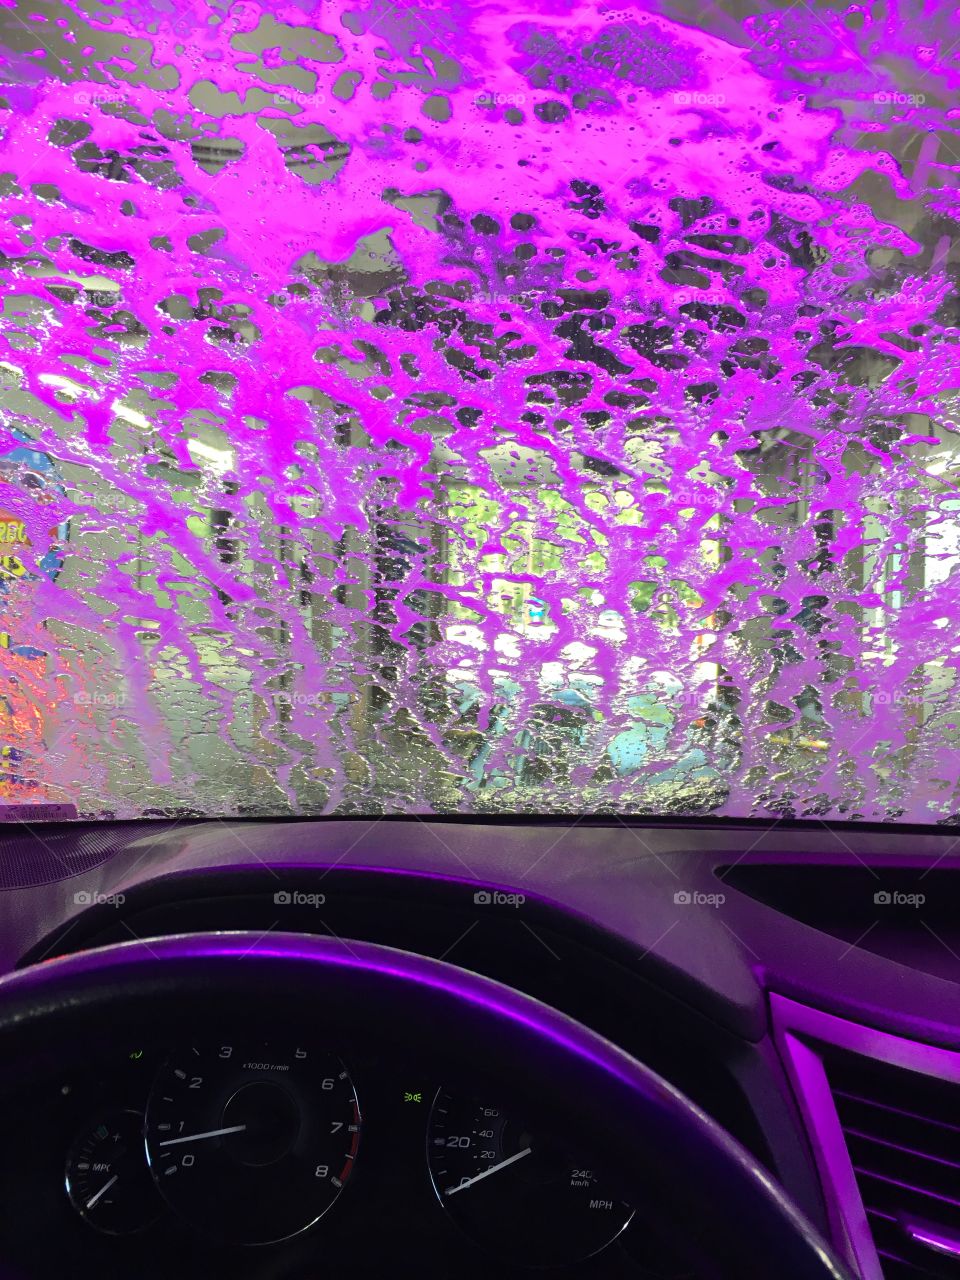 Getting a car wash!  Cool purple foam!